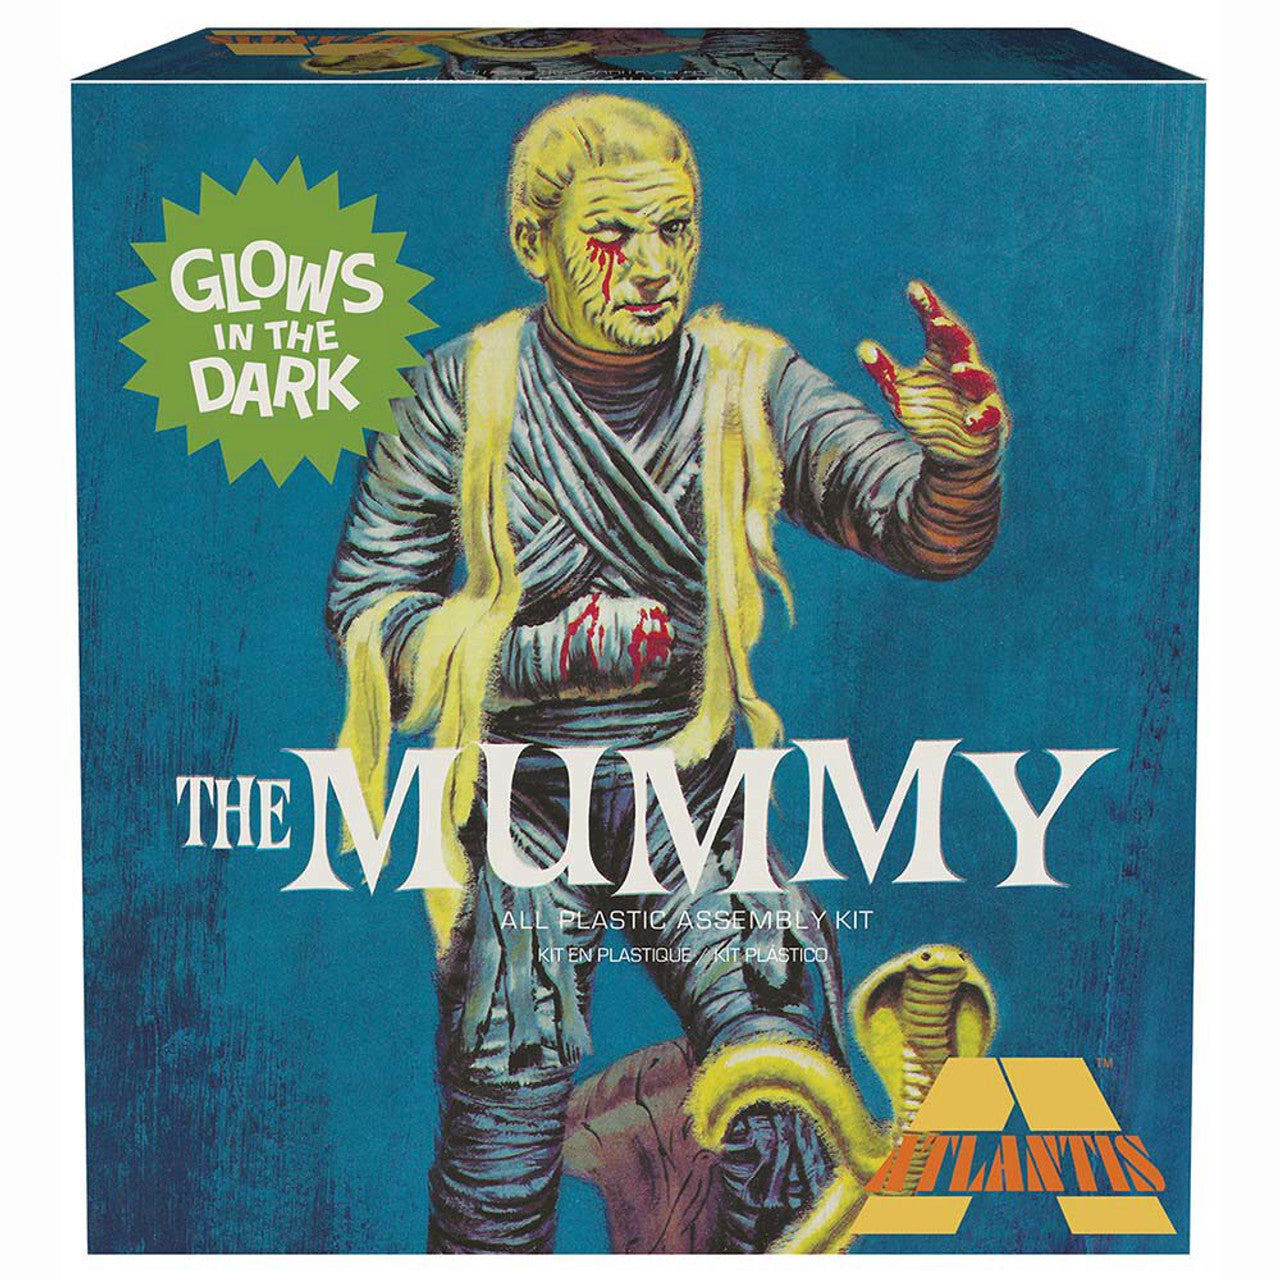 Atlantis Models A452 1:8 The Mummy Glow-in-the-Dark Plastic Figure Kit